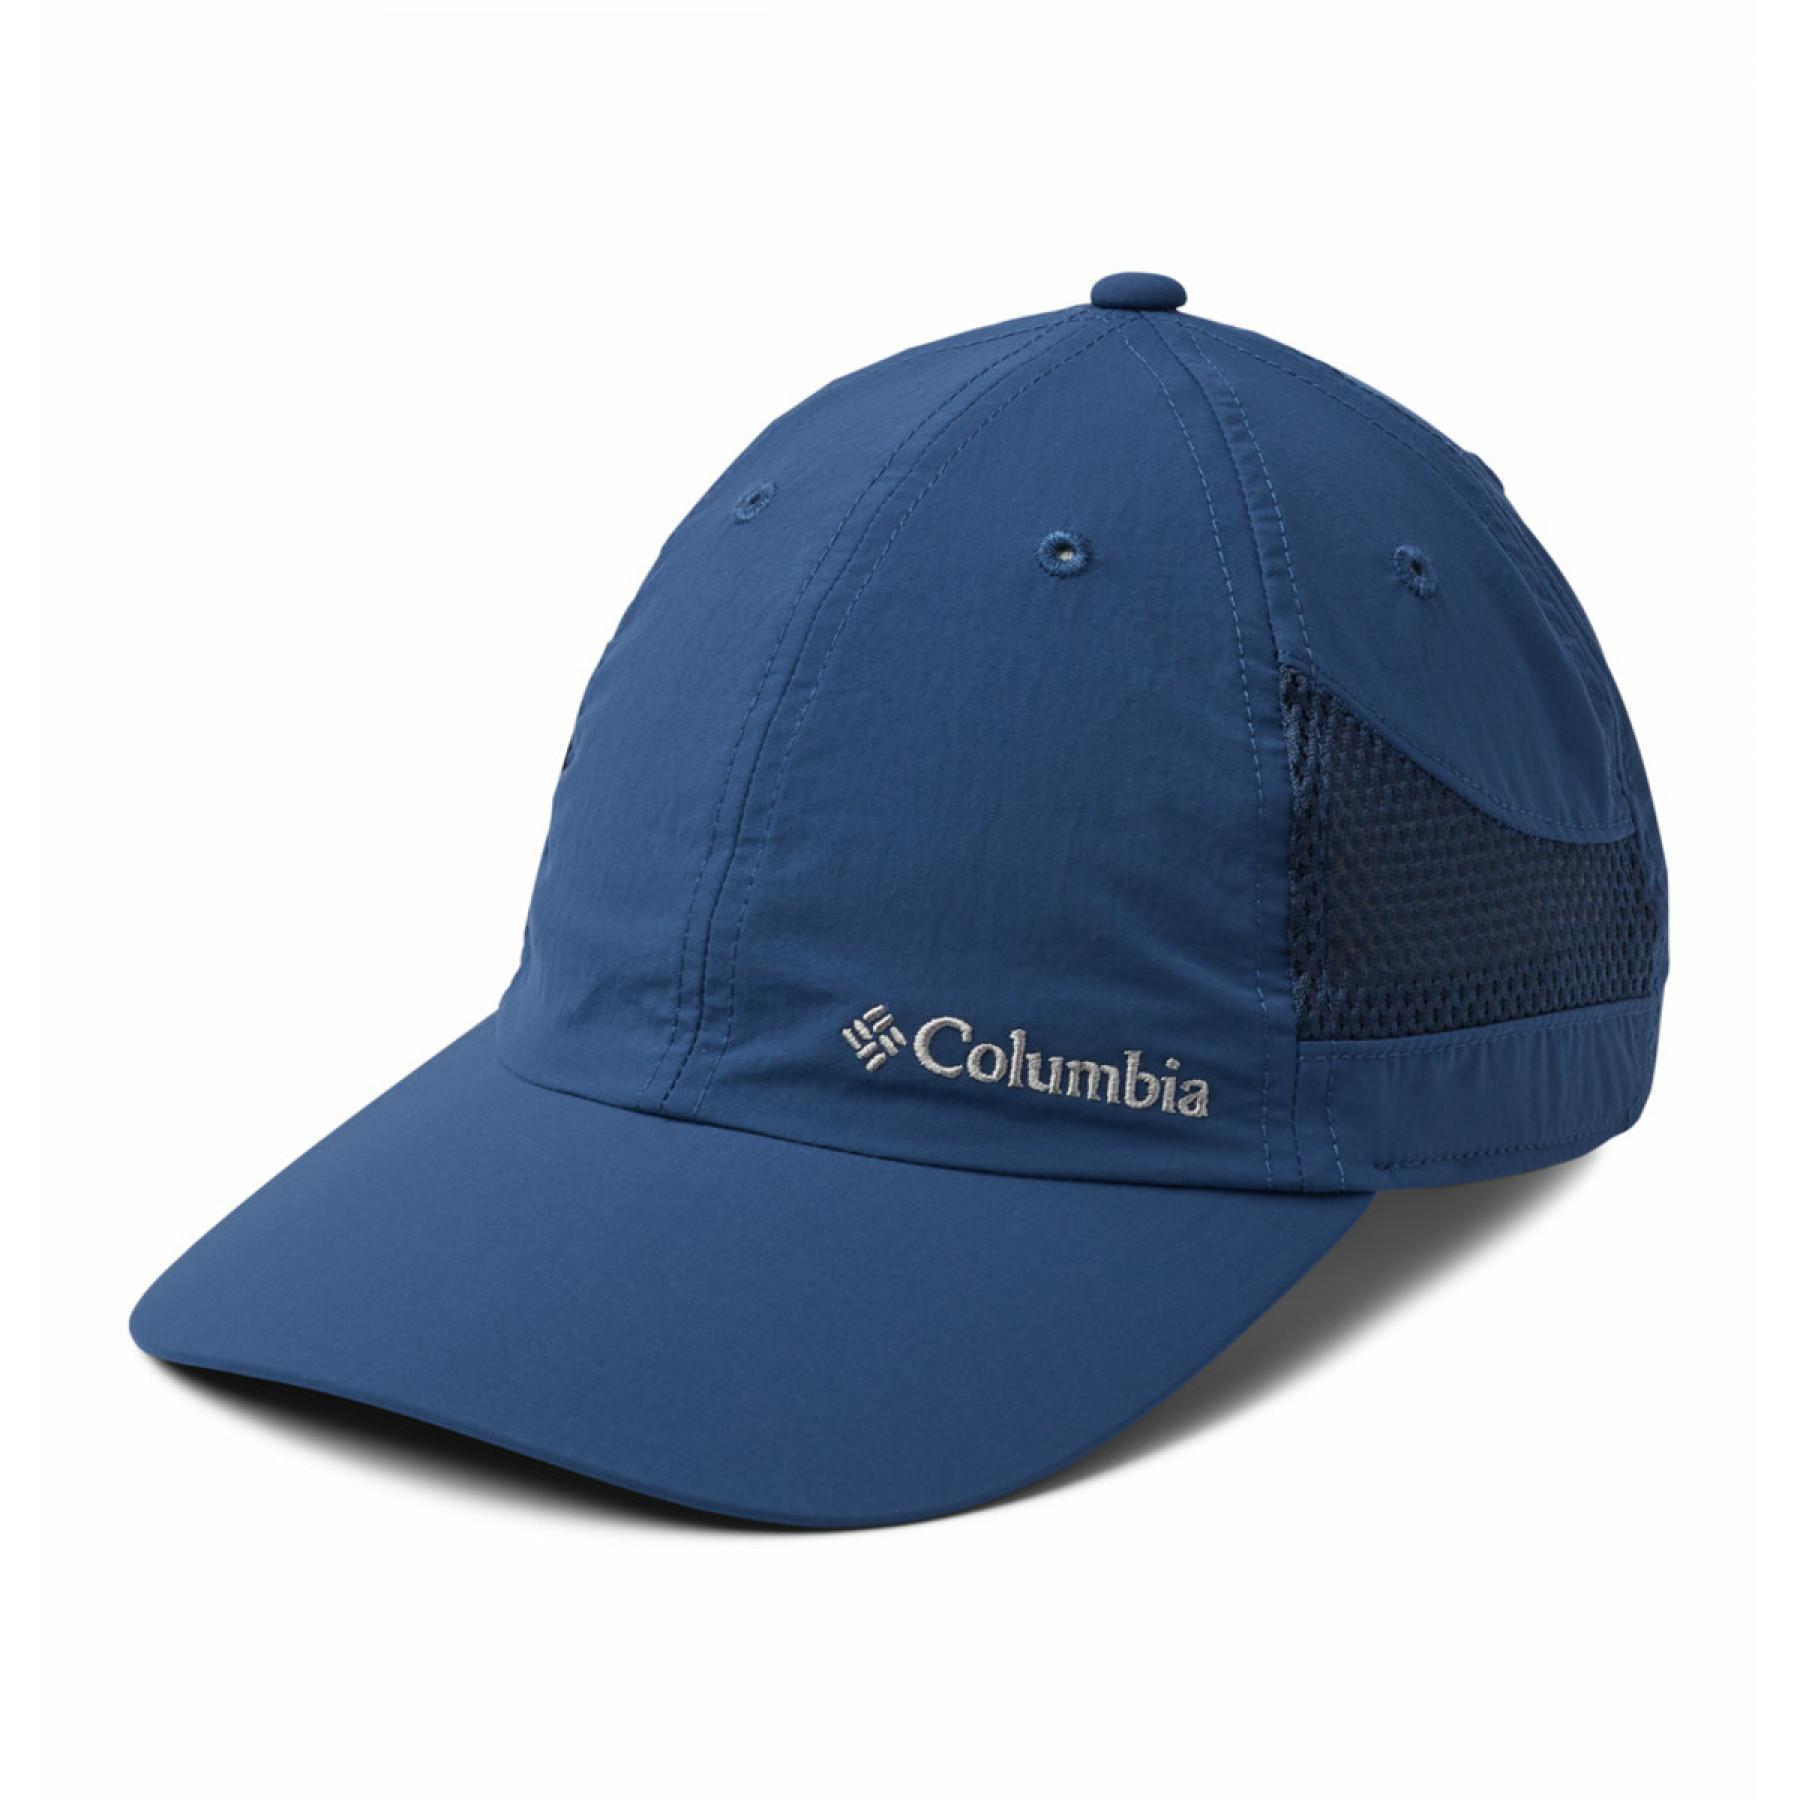 Cap Columbia Tech Shade